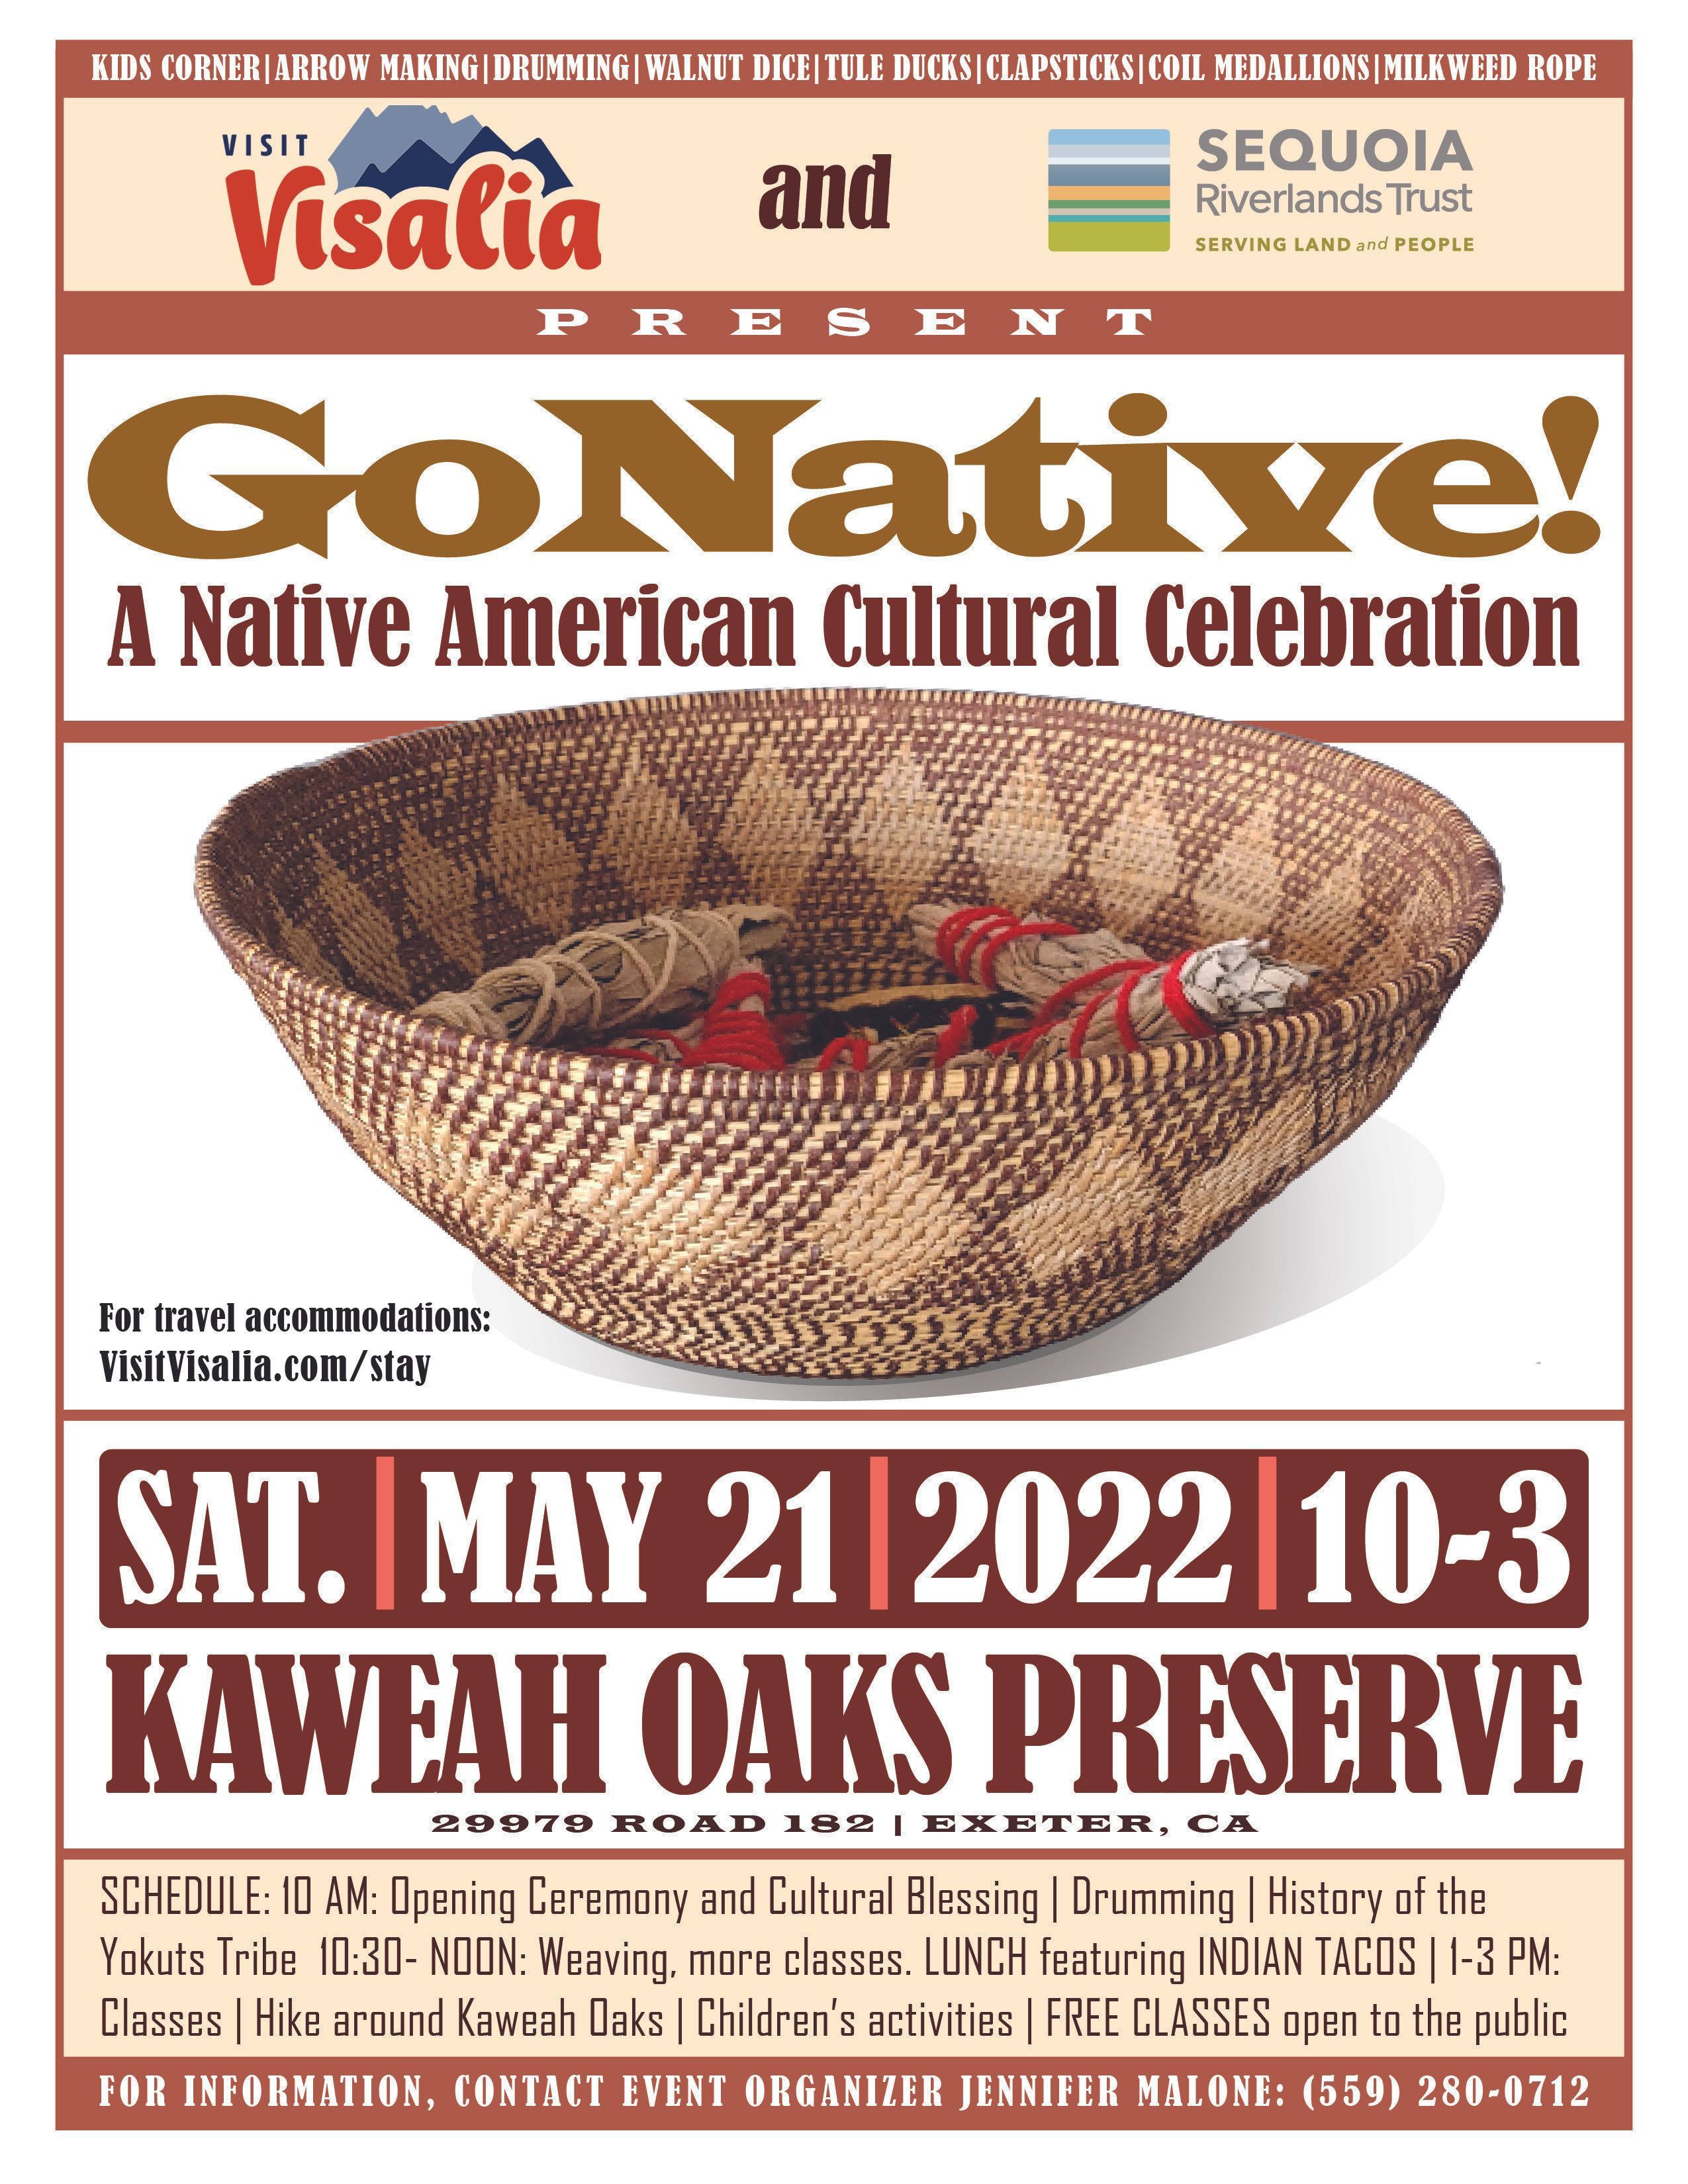 GO NATIVE! returns to SRT's Kaweah Oaks Preserve May 21